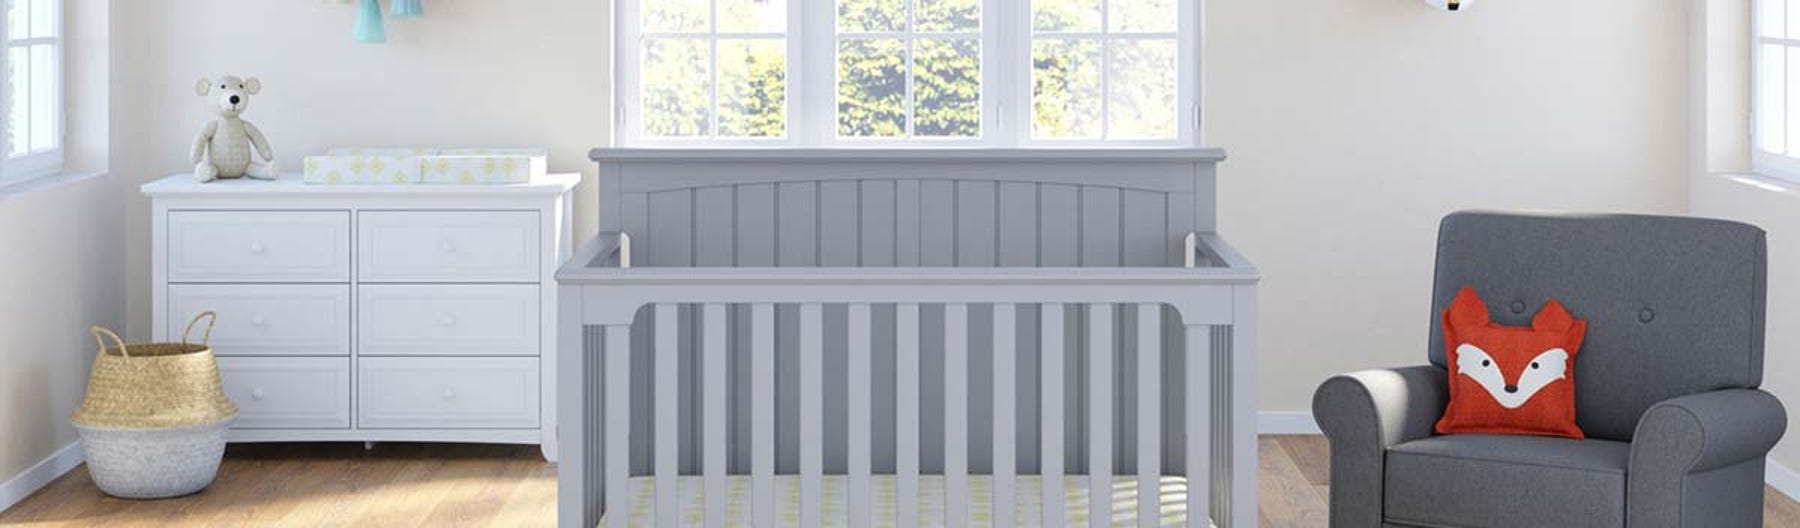 Nursery Furniture Baby Maternity Best Buy Canada